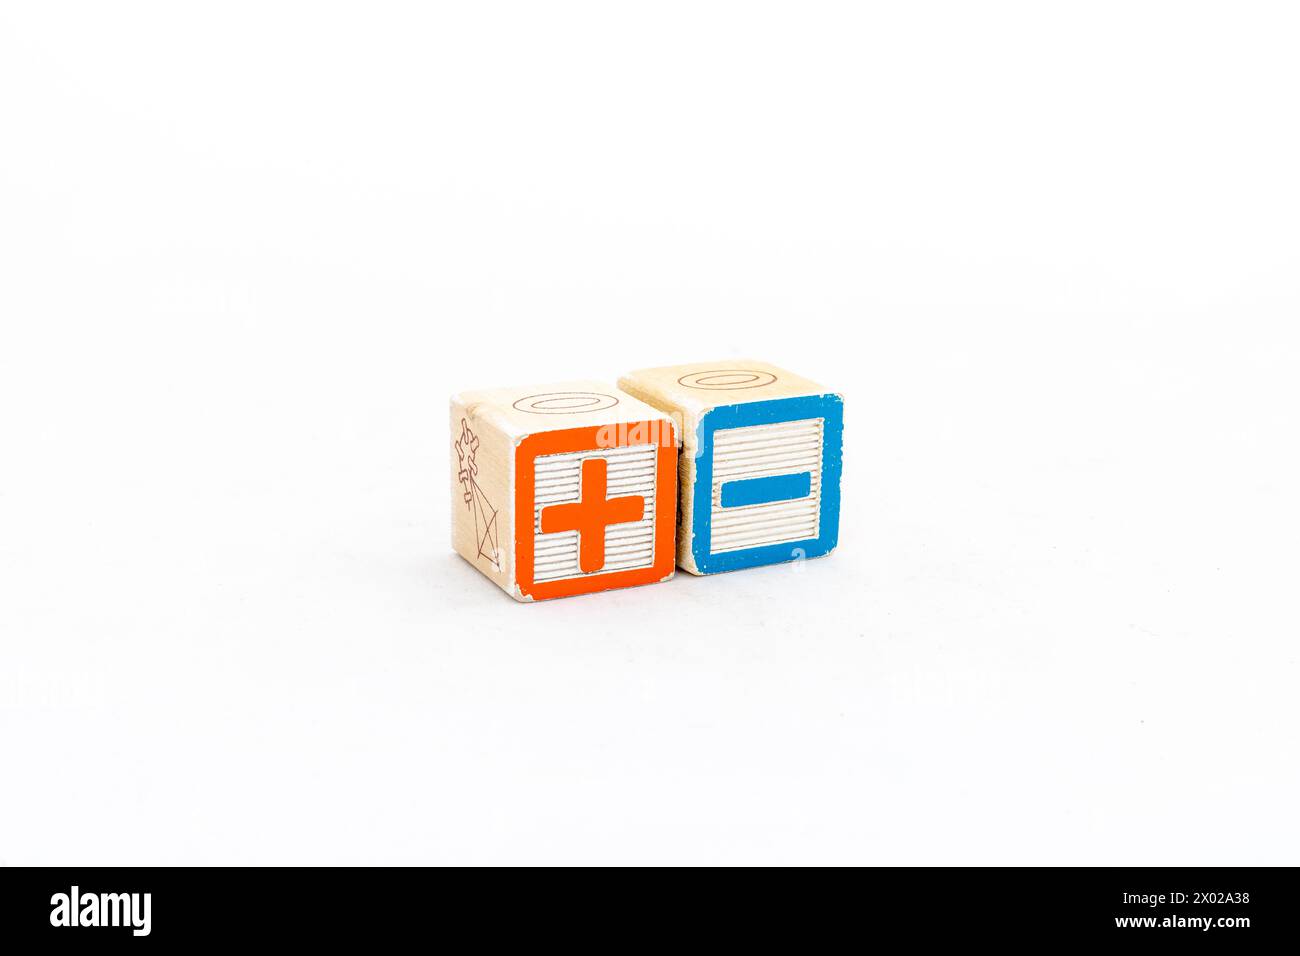 Math symbols plus and minus wooden blocks isolated on white background. Mathematics concept. Stock Photo